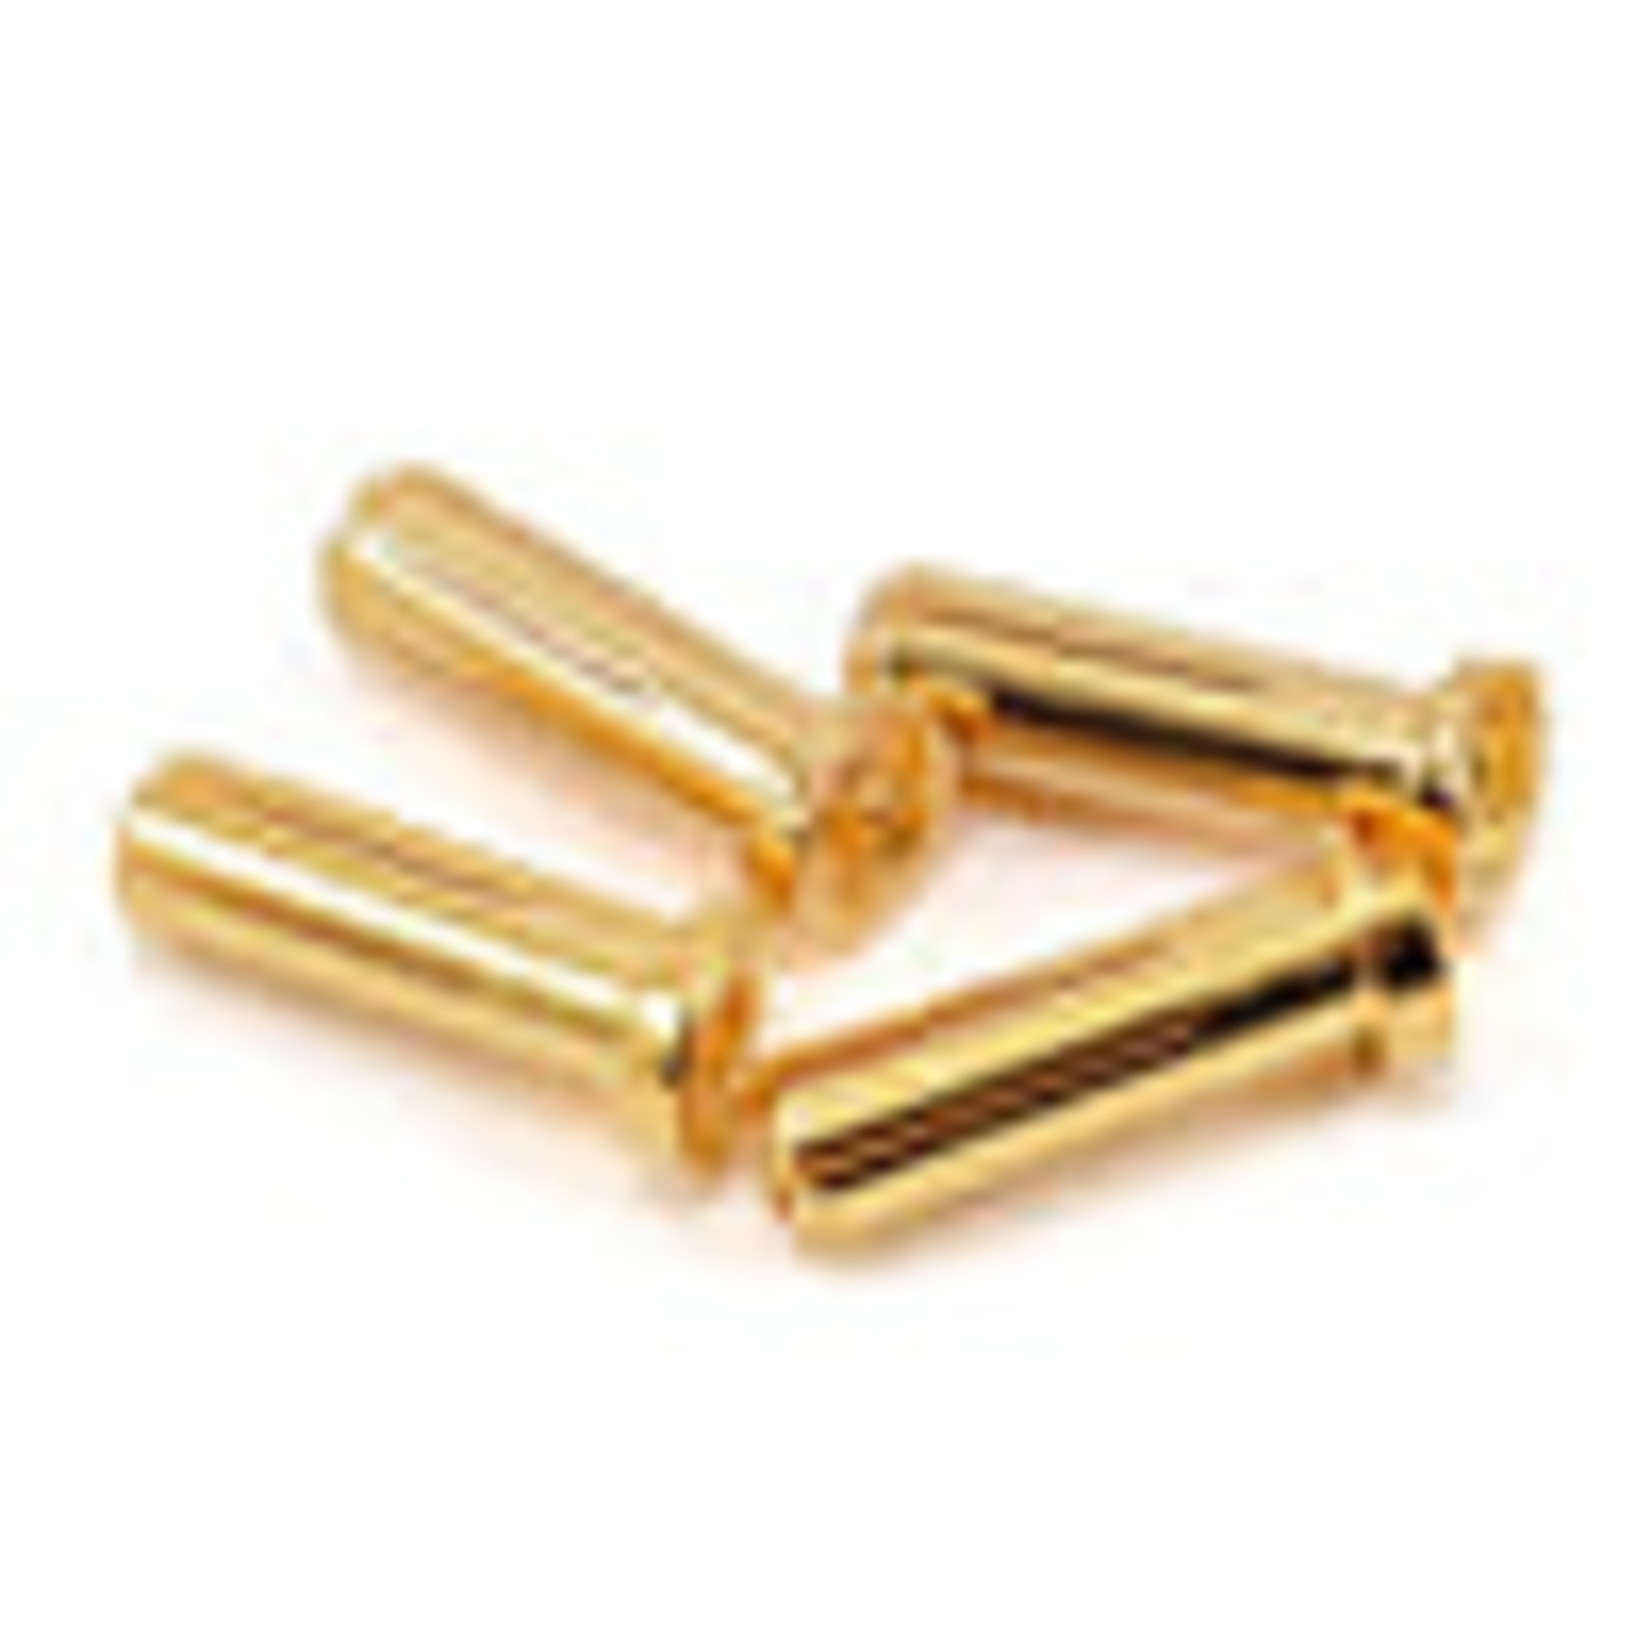 Protek R/C 5.0mm Super Bullet Sold Gold Connectors (4 Male)